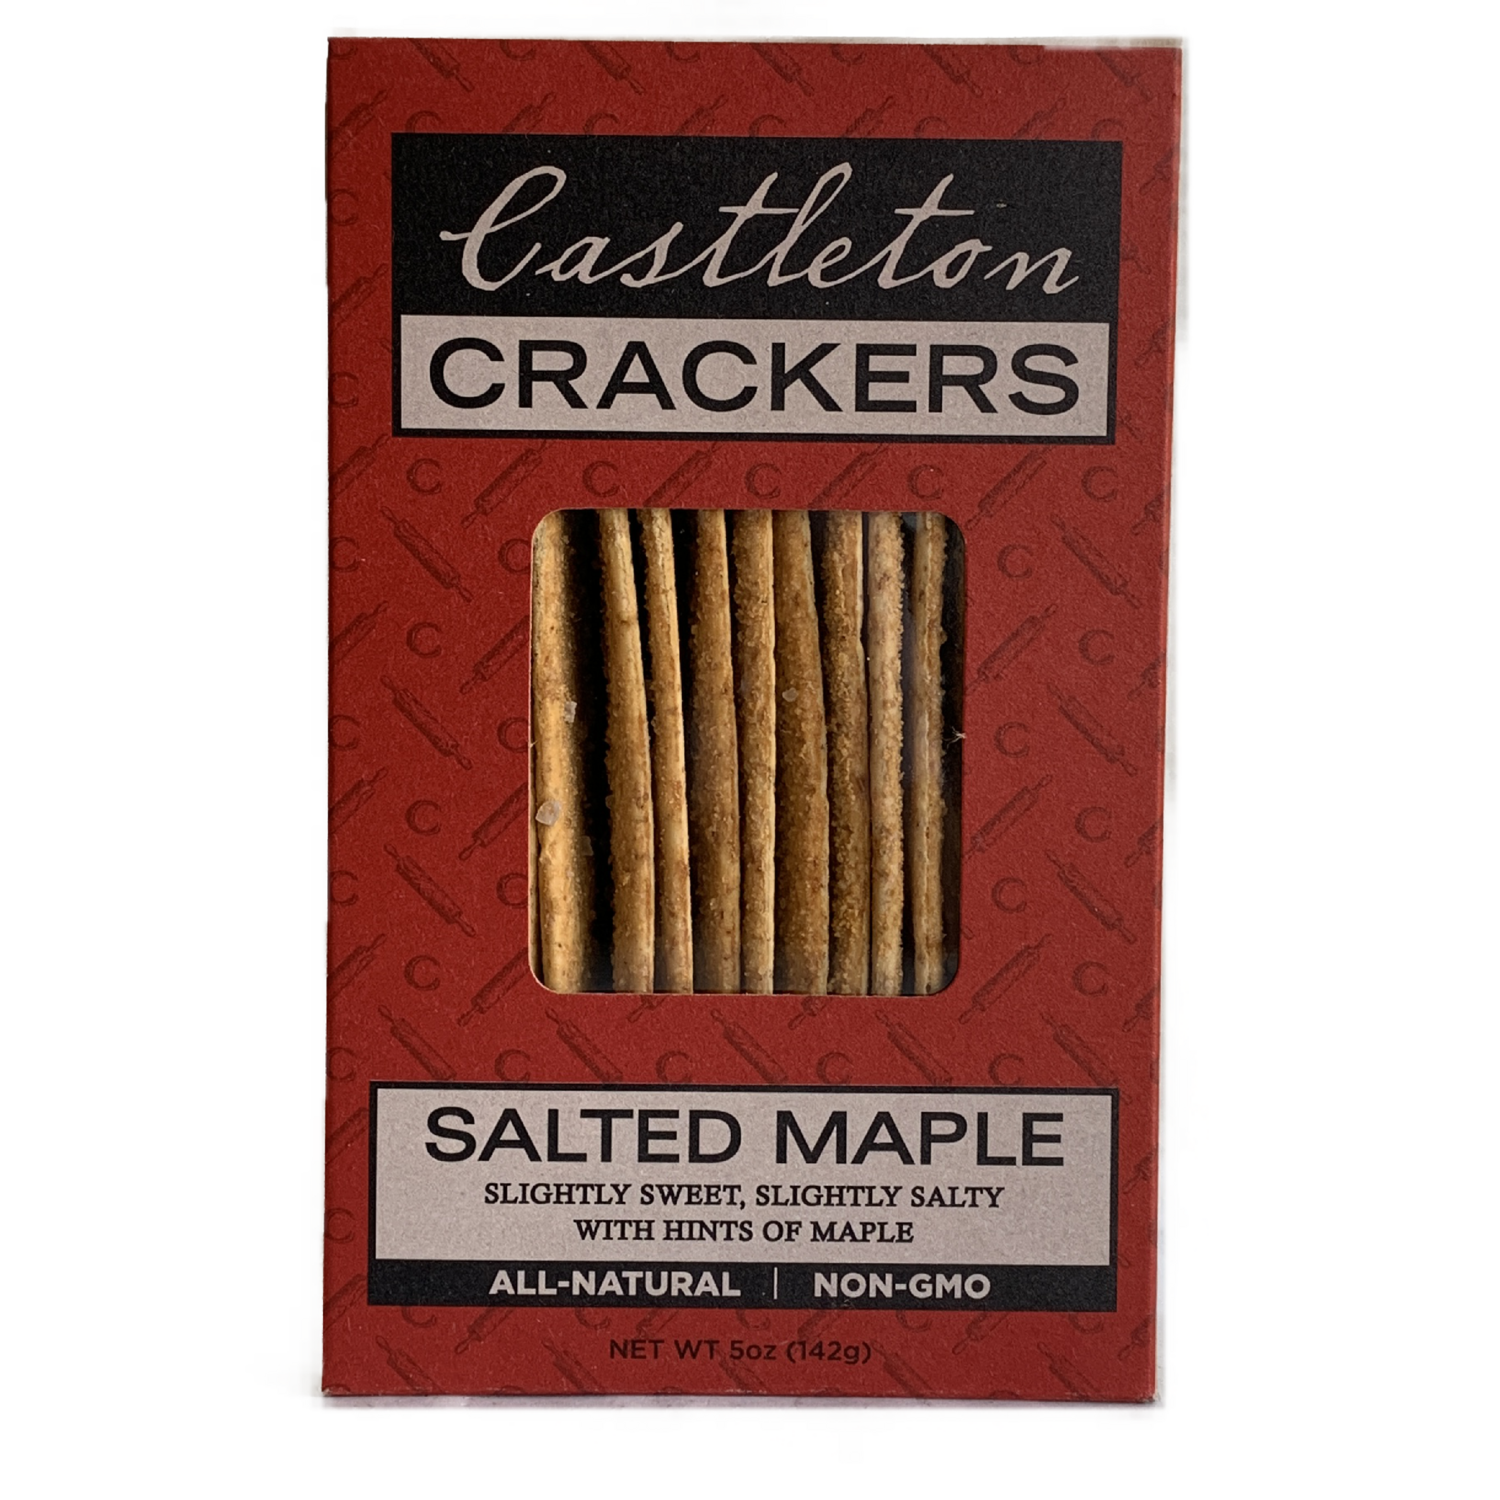 CASTLETON CRACKERS Salted Maple